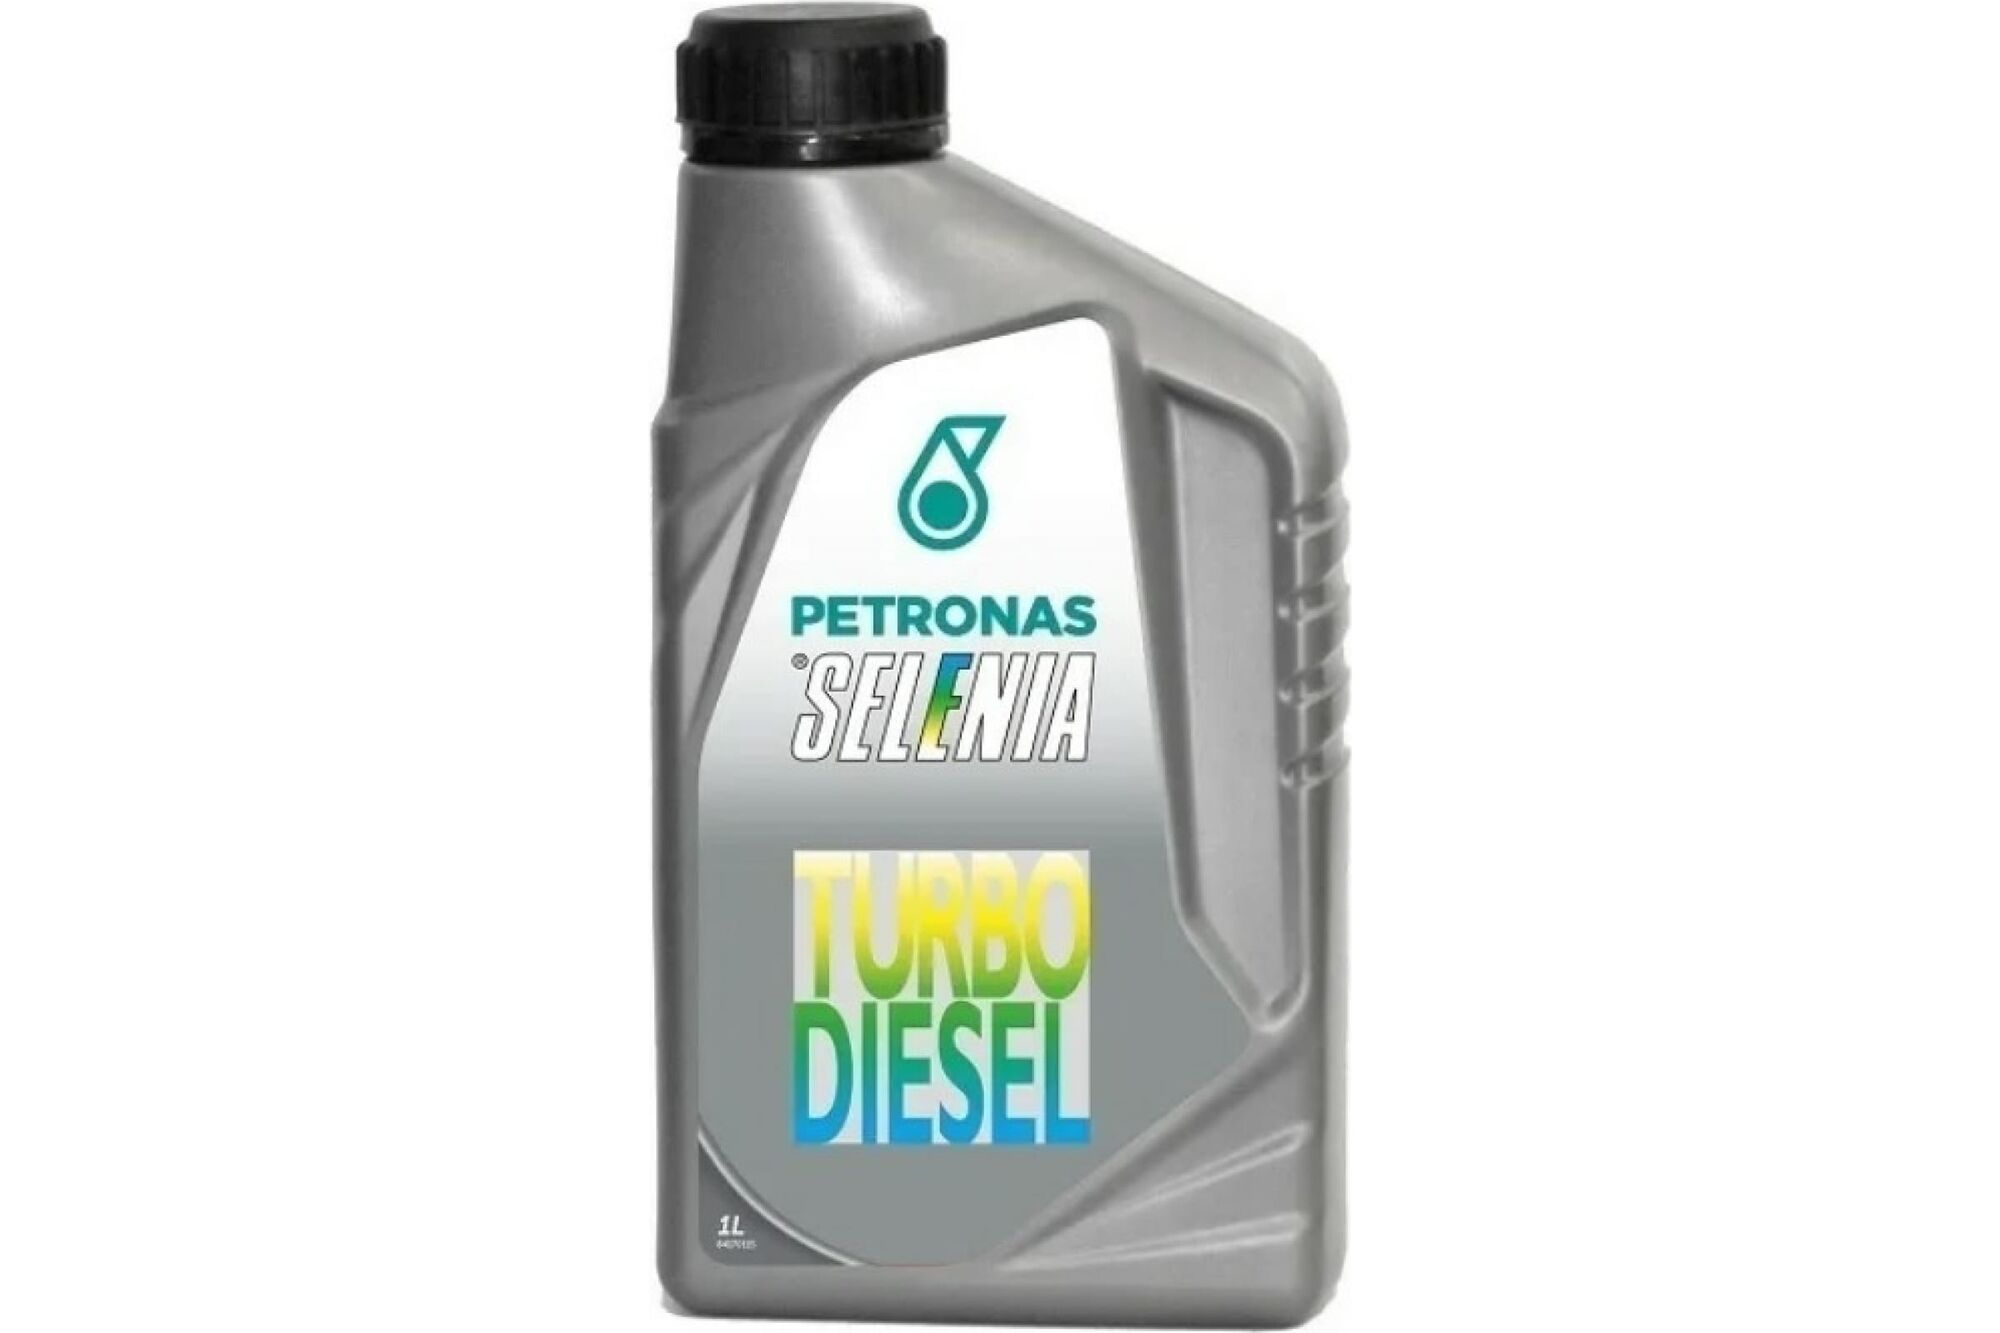 Моторное масло PETRONAS SELENIA TURBO DIESEL полусинтетическое, 10W40, 1 л 70566E18EU Petronas